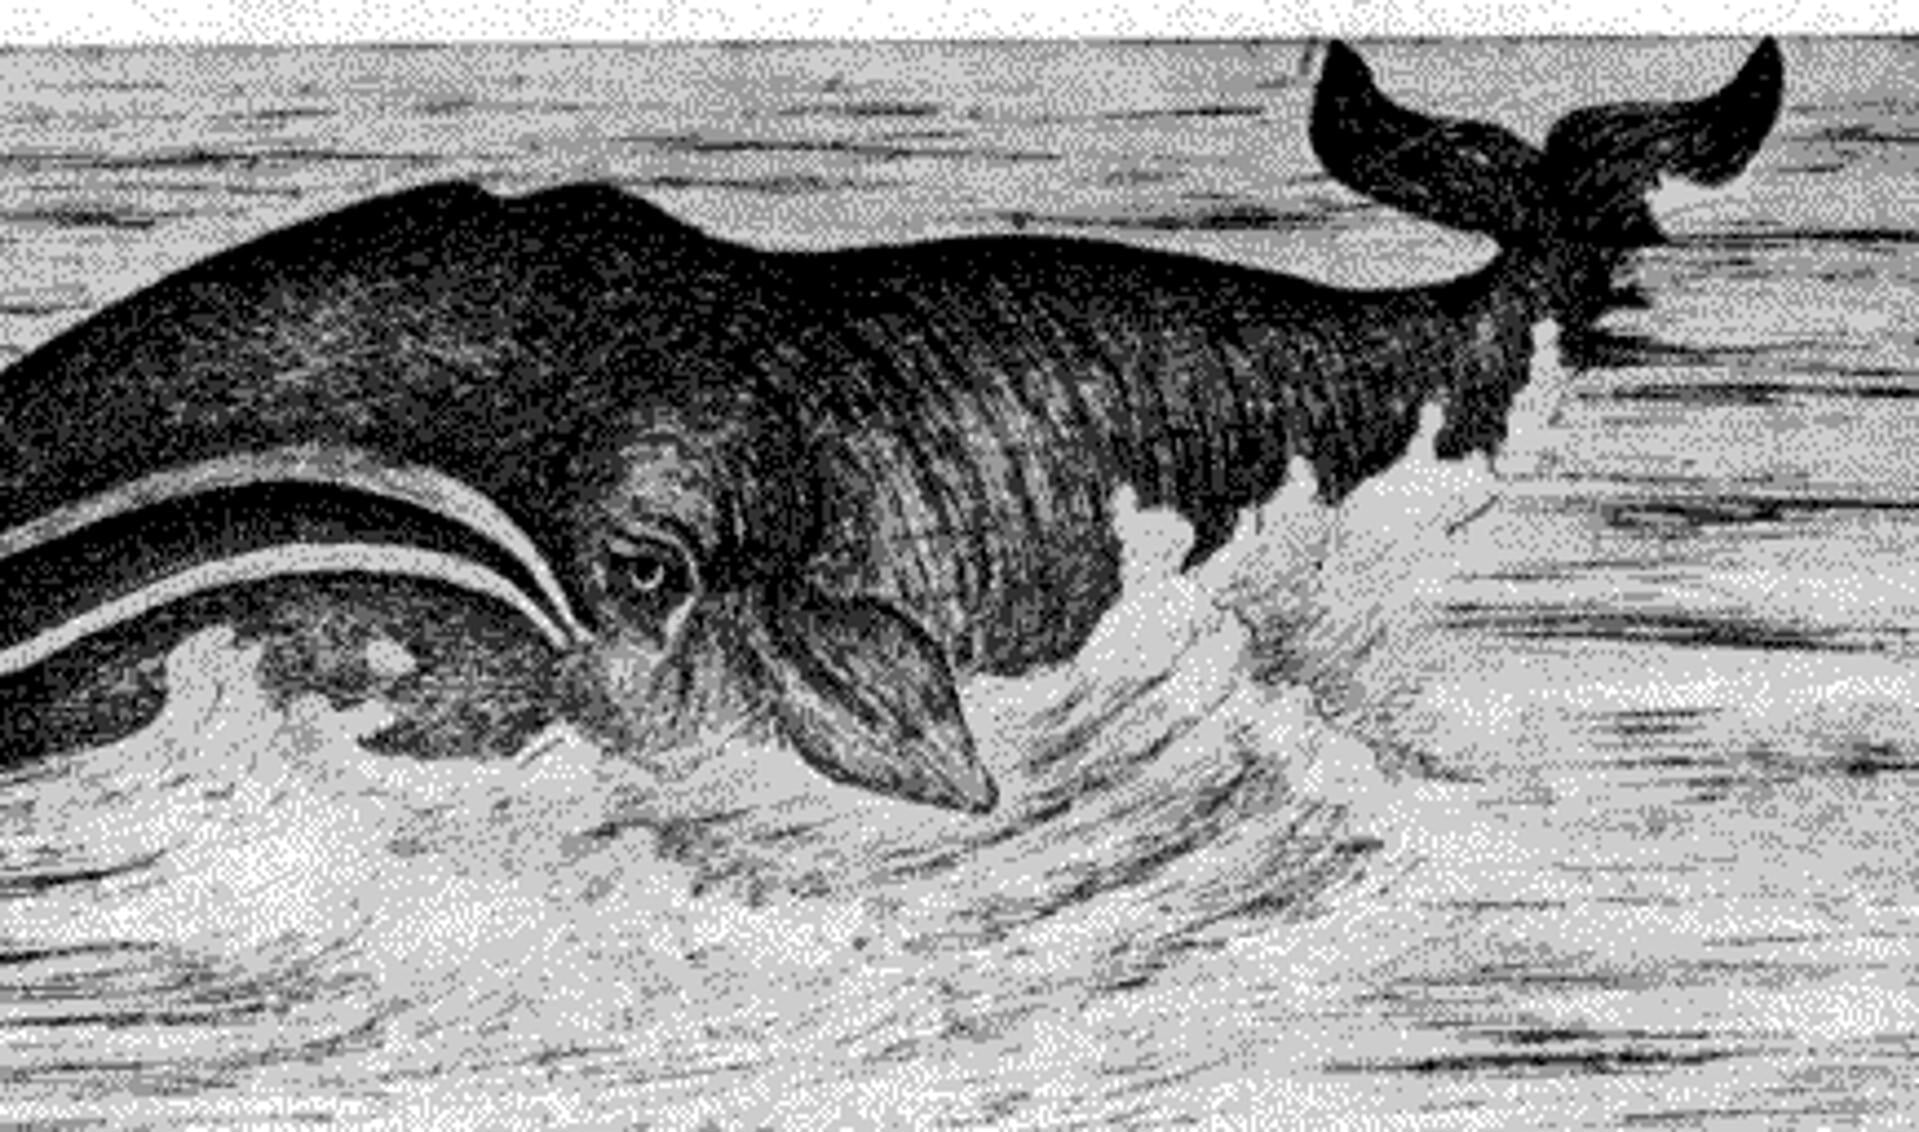 Groenlandse walvis